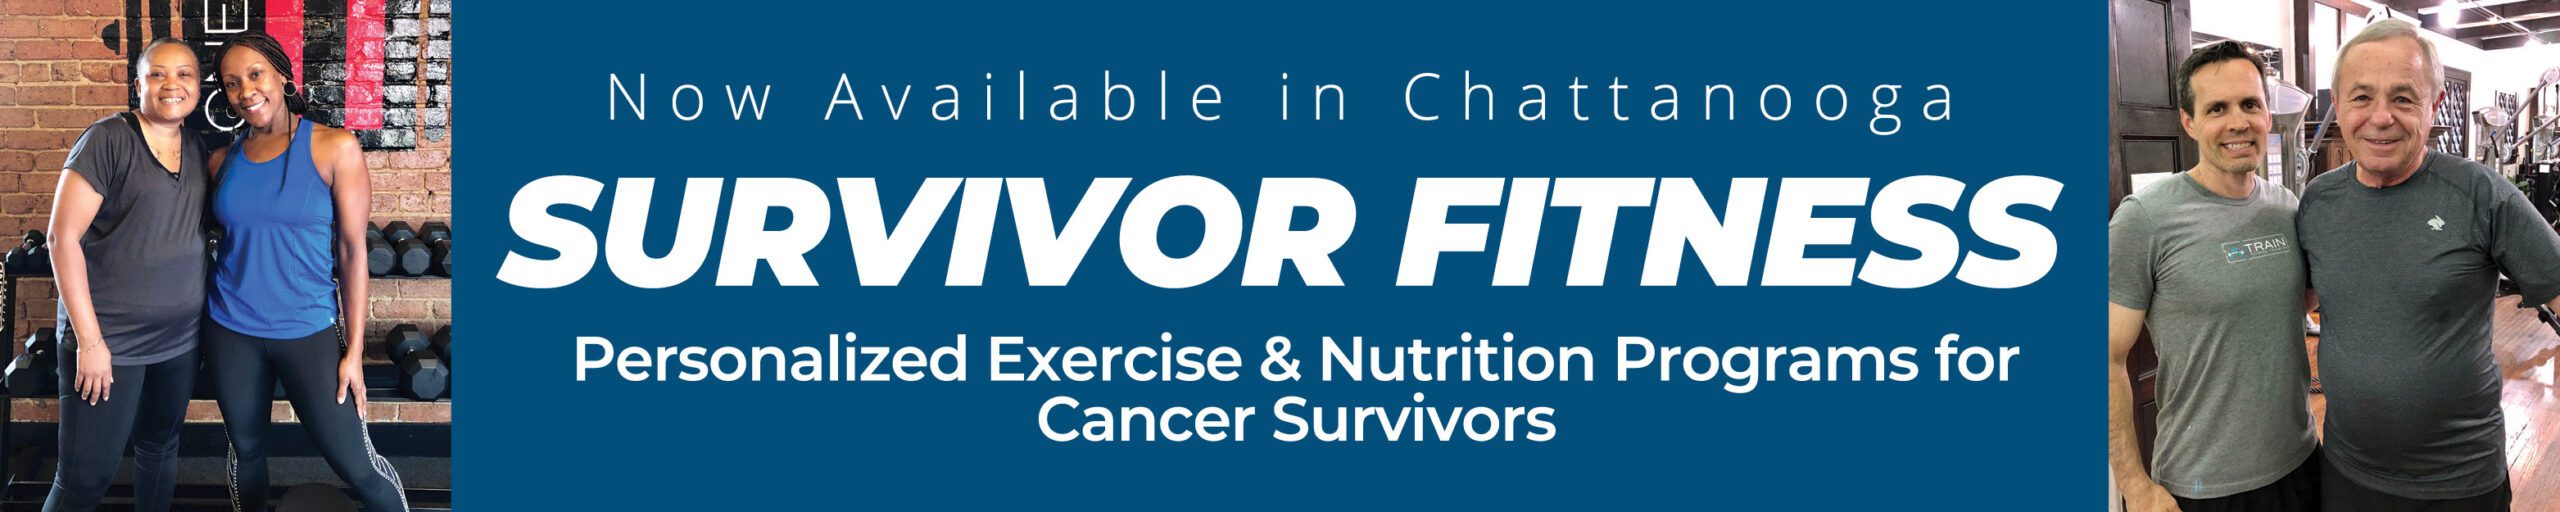 Survivor Fitness Ad